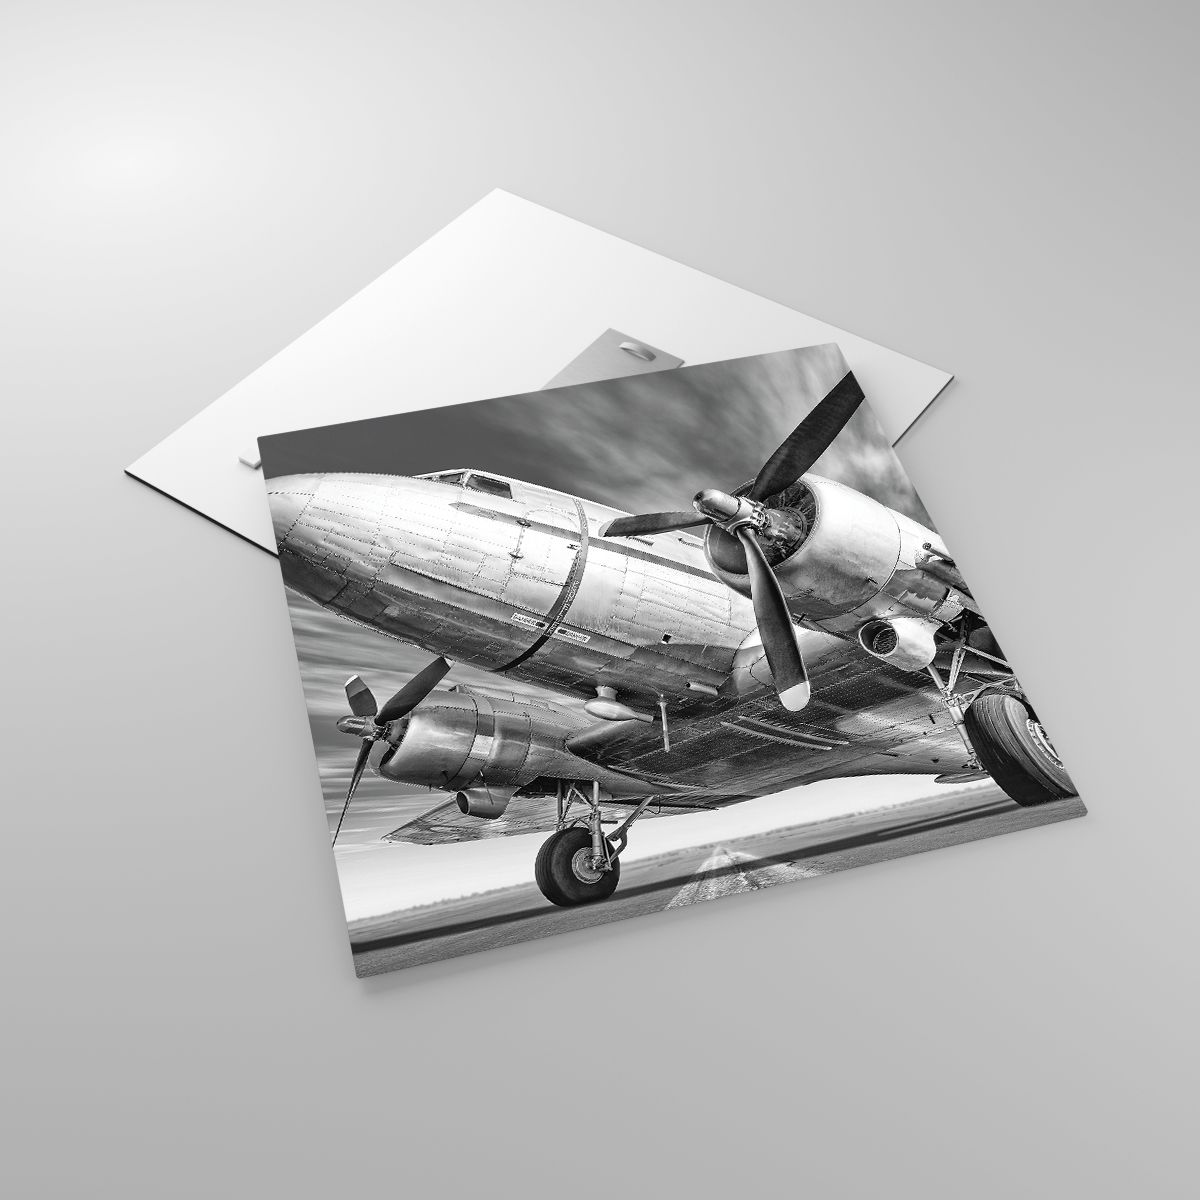 Glasbild Ebene, Glasbild Retro, Glasbild Flugzeug, Glasbild Flughafen, Glasbild Schwarz Und Weiß